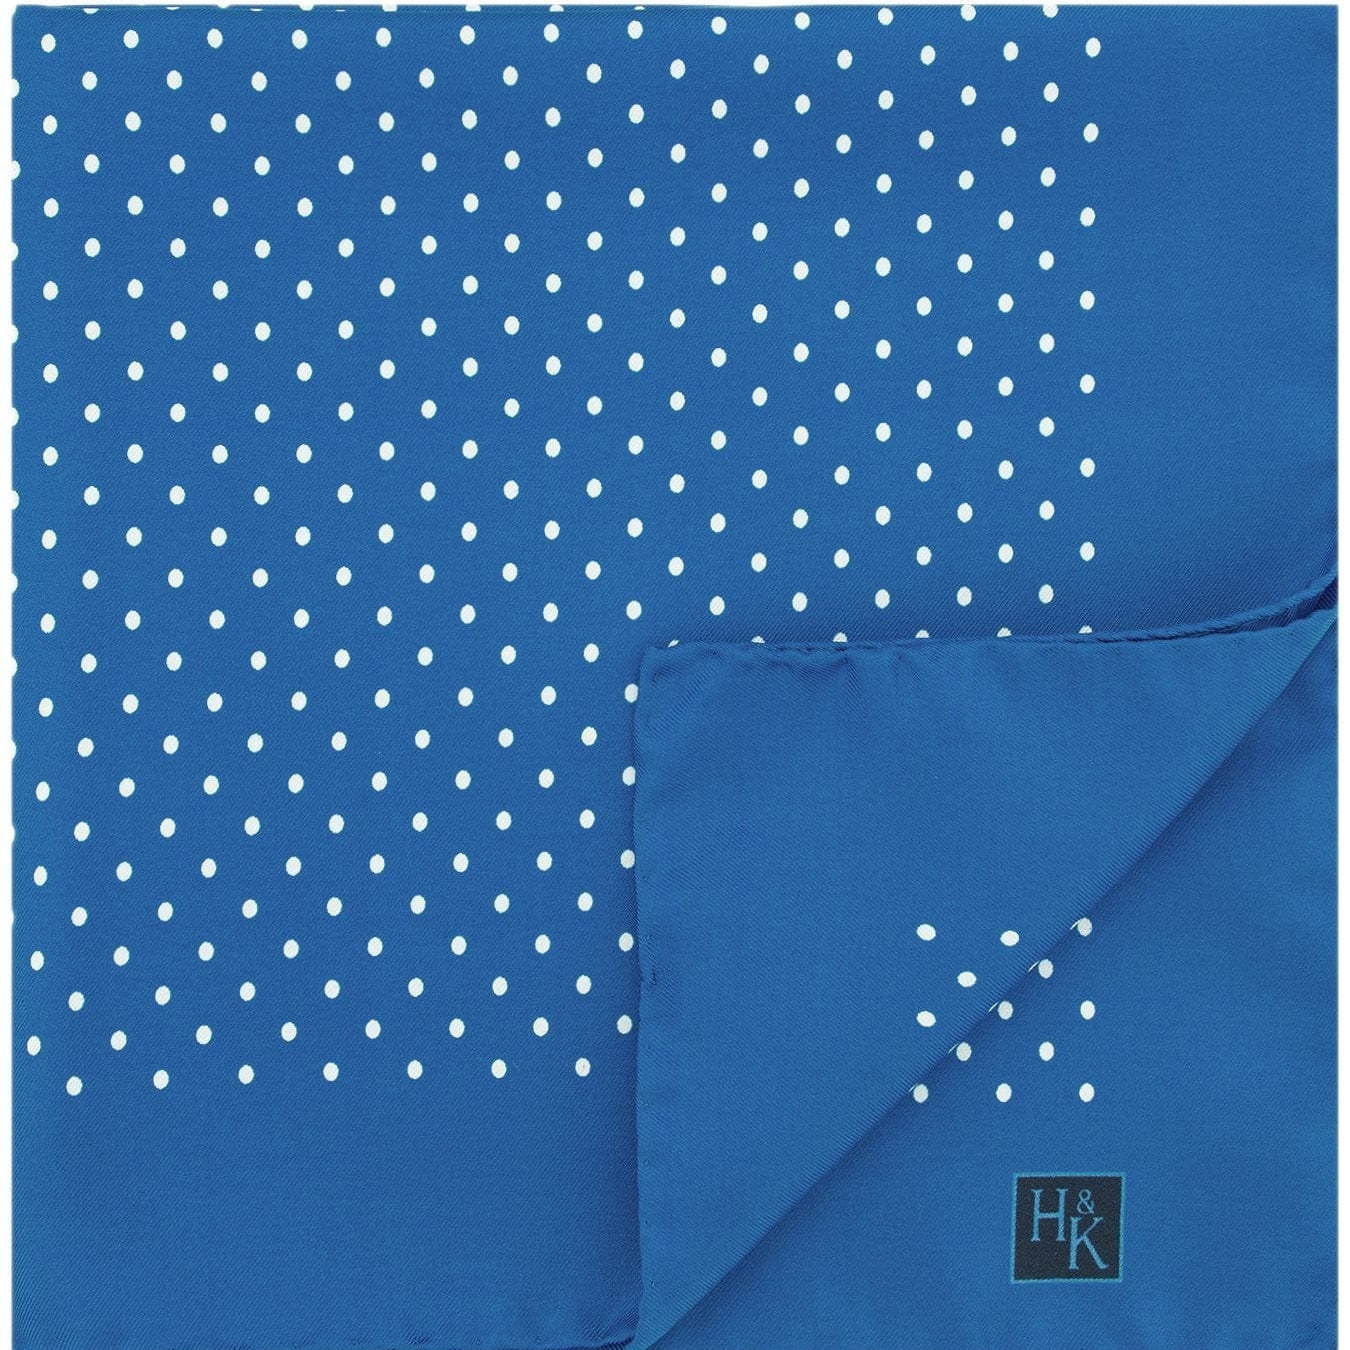 Blue Silk Handkerchief with White Spots